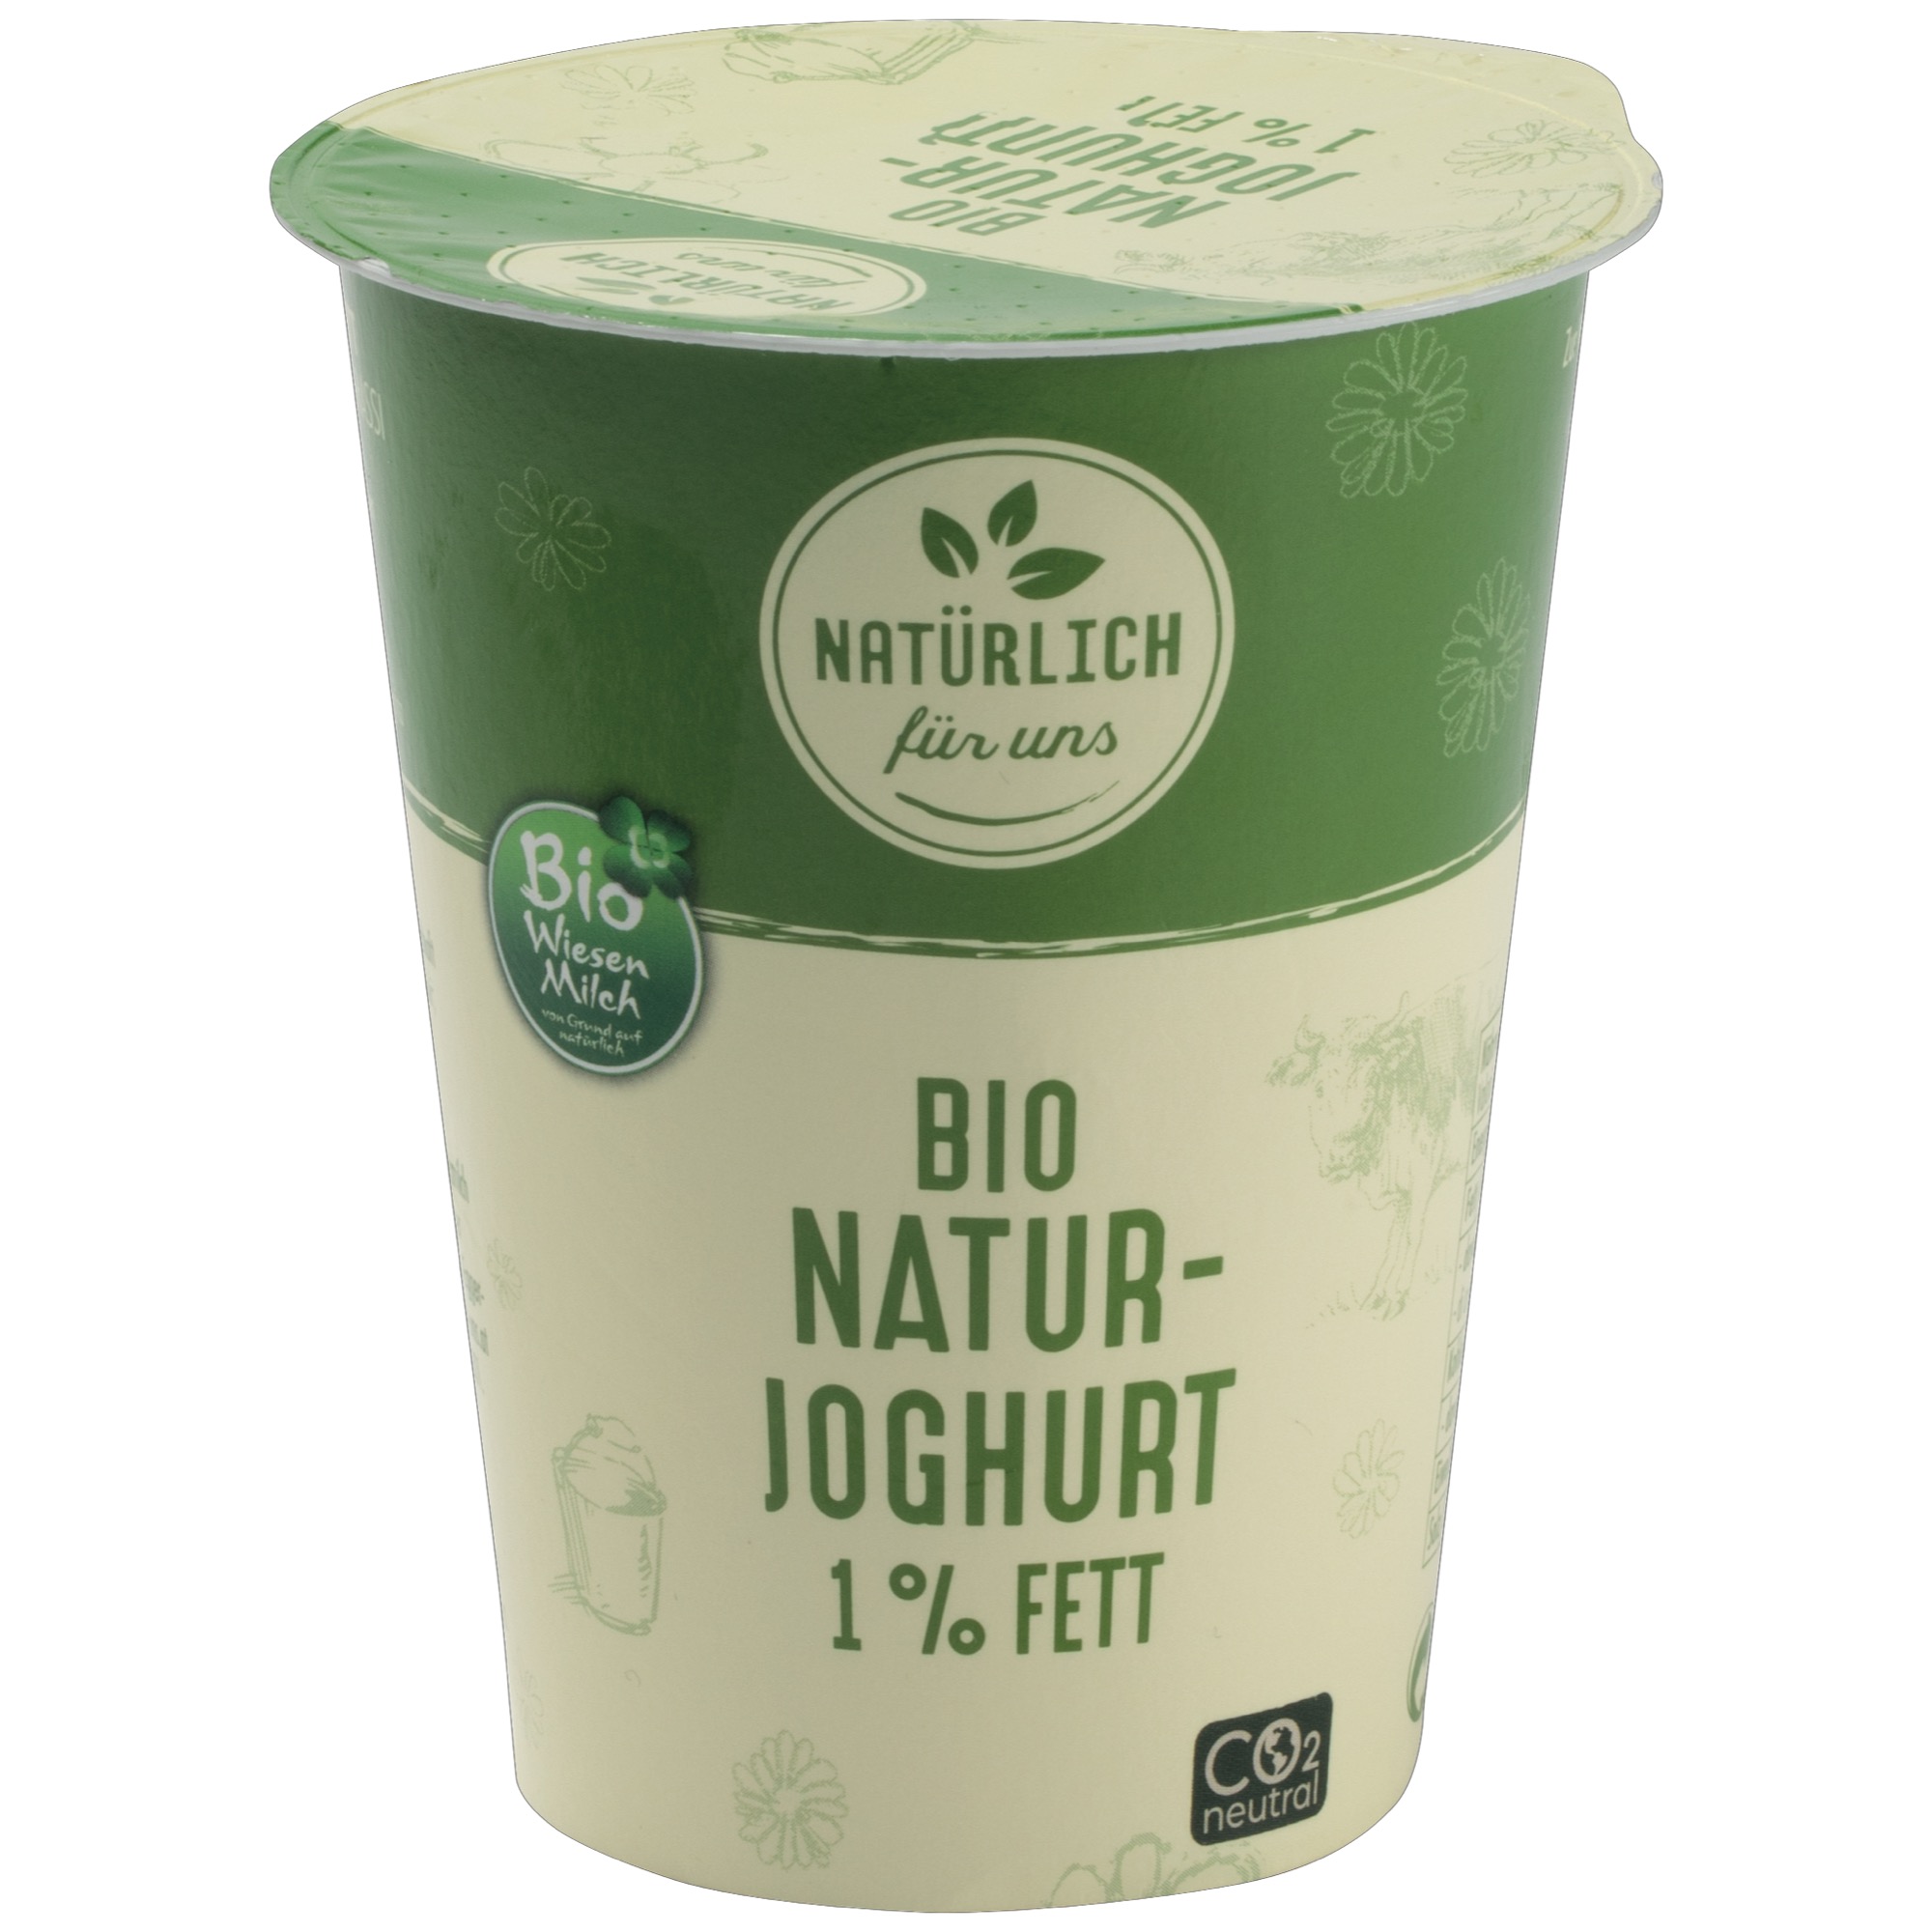 NFU Bio WM jogurt prírodný 1% 200g